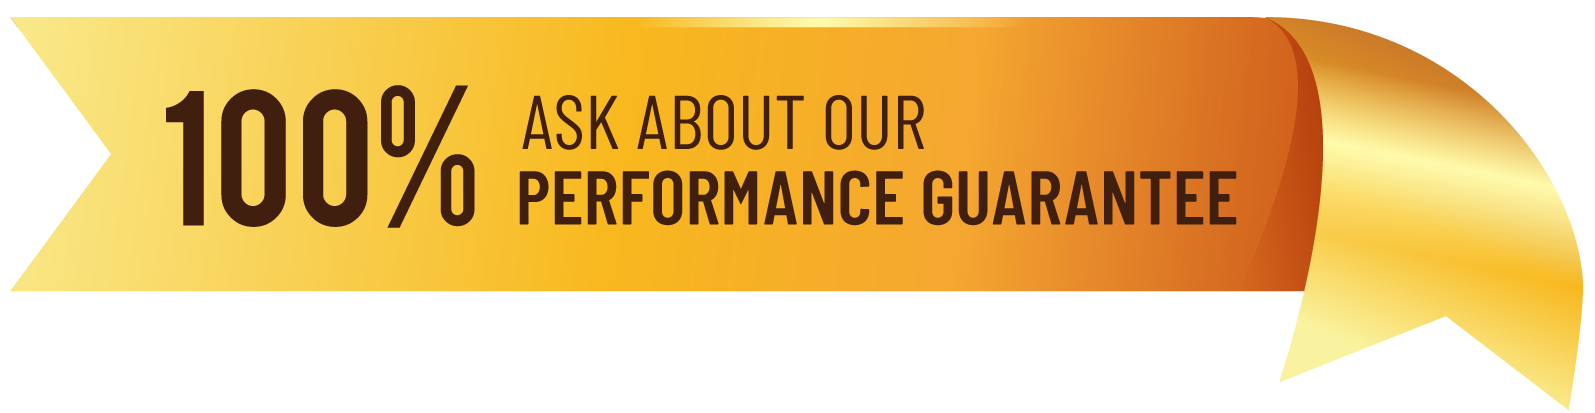 Performance guarantee badge